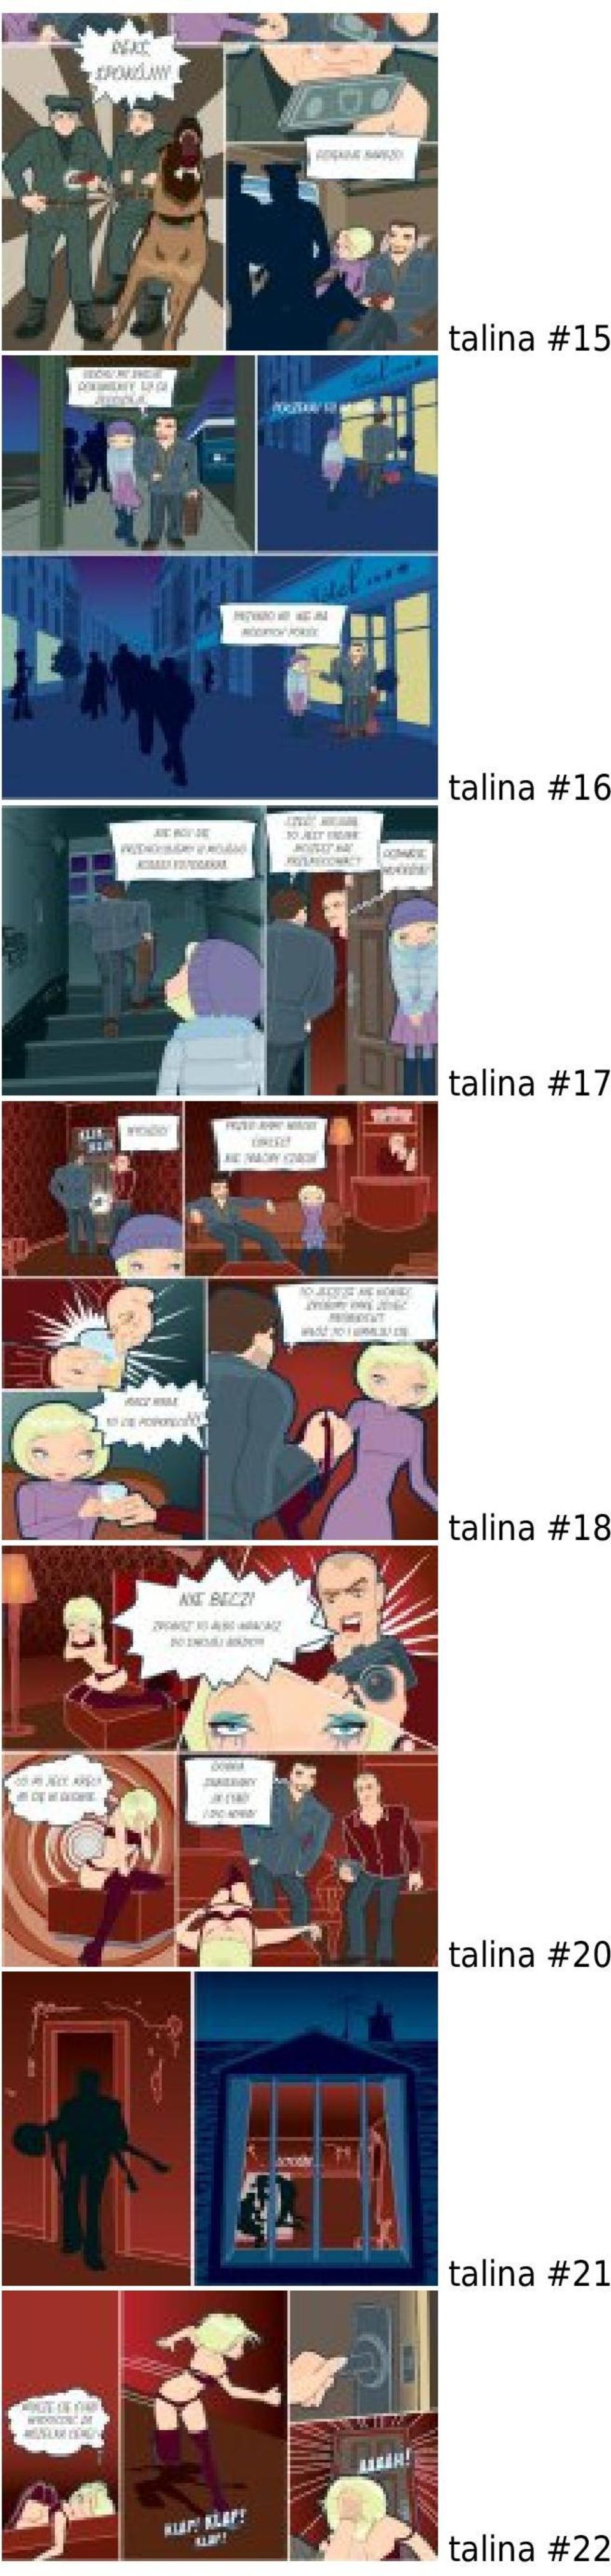 talina #18 talina